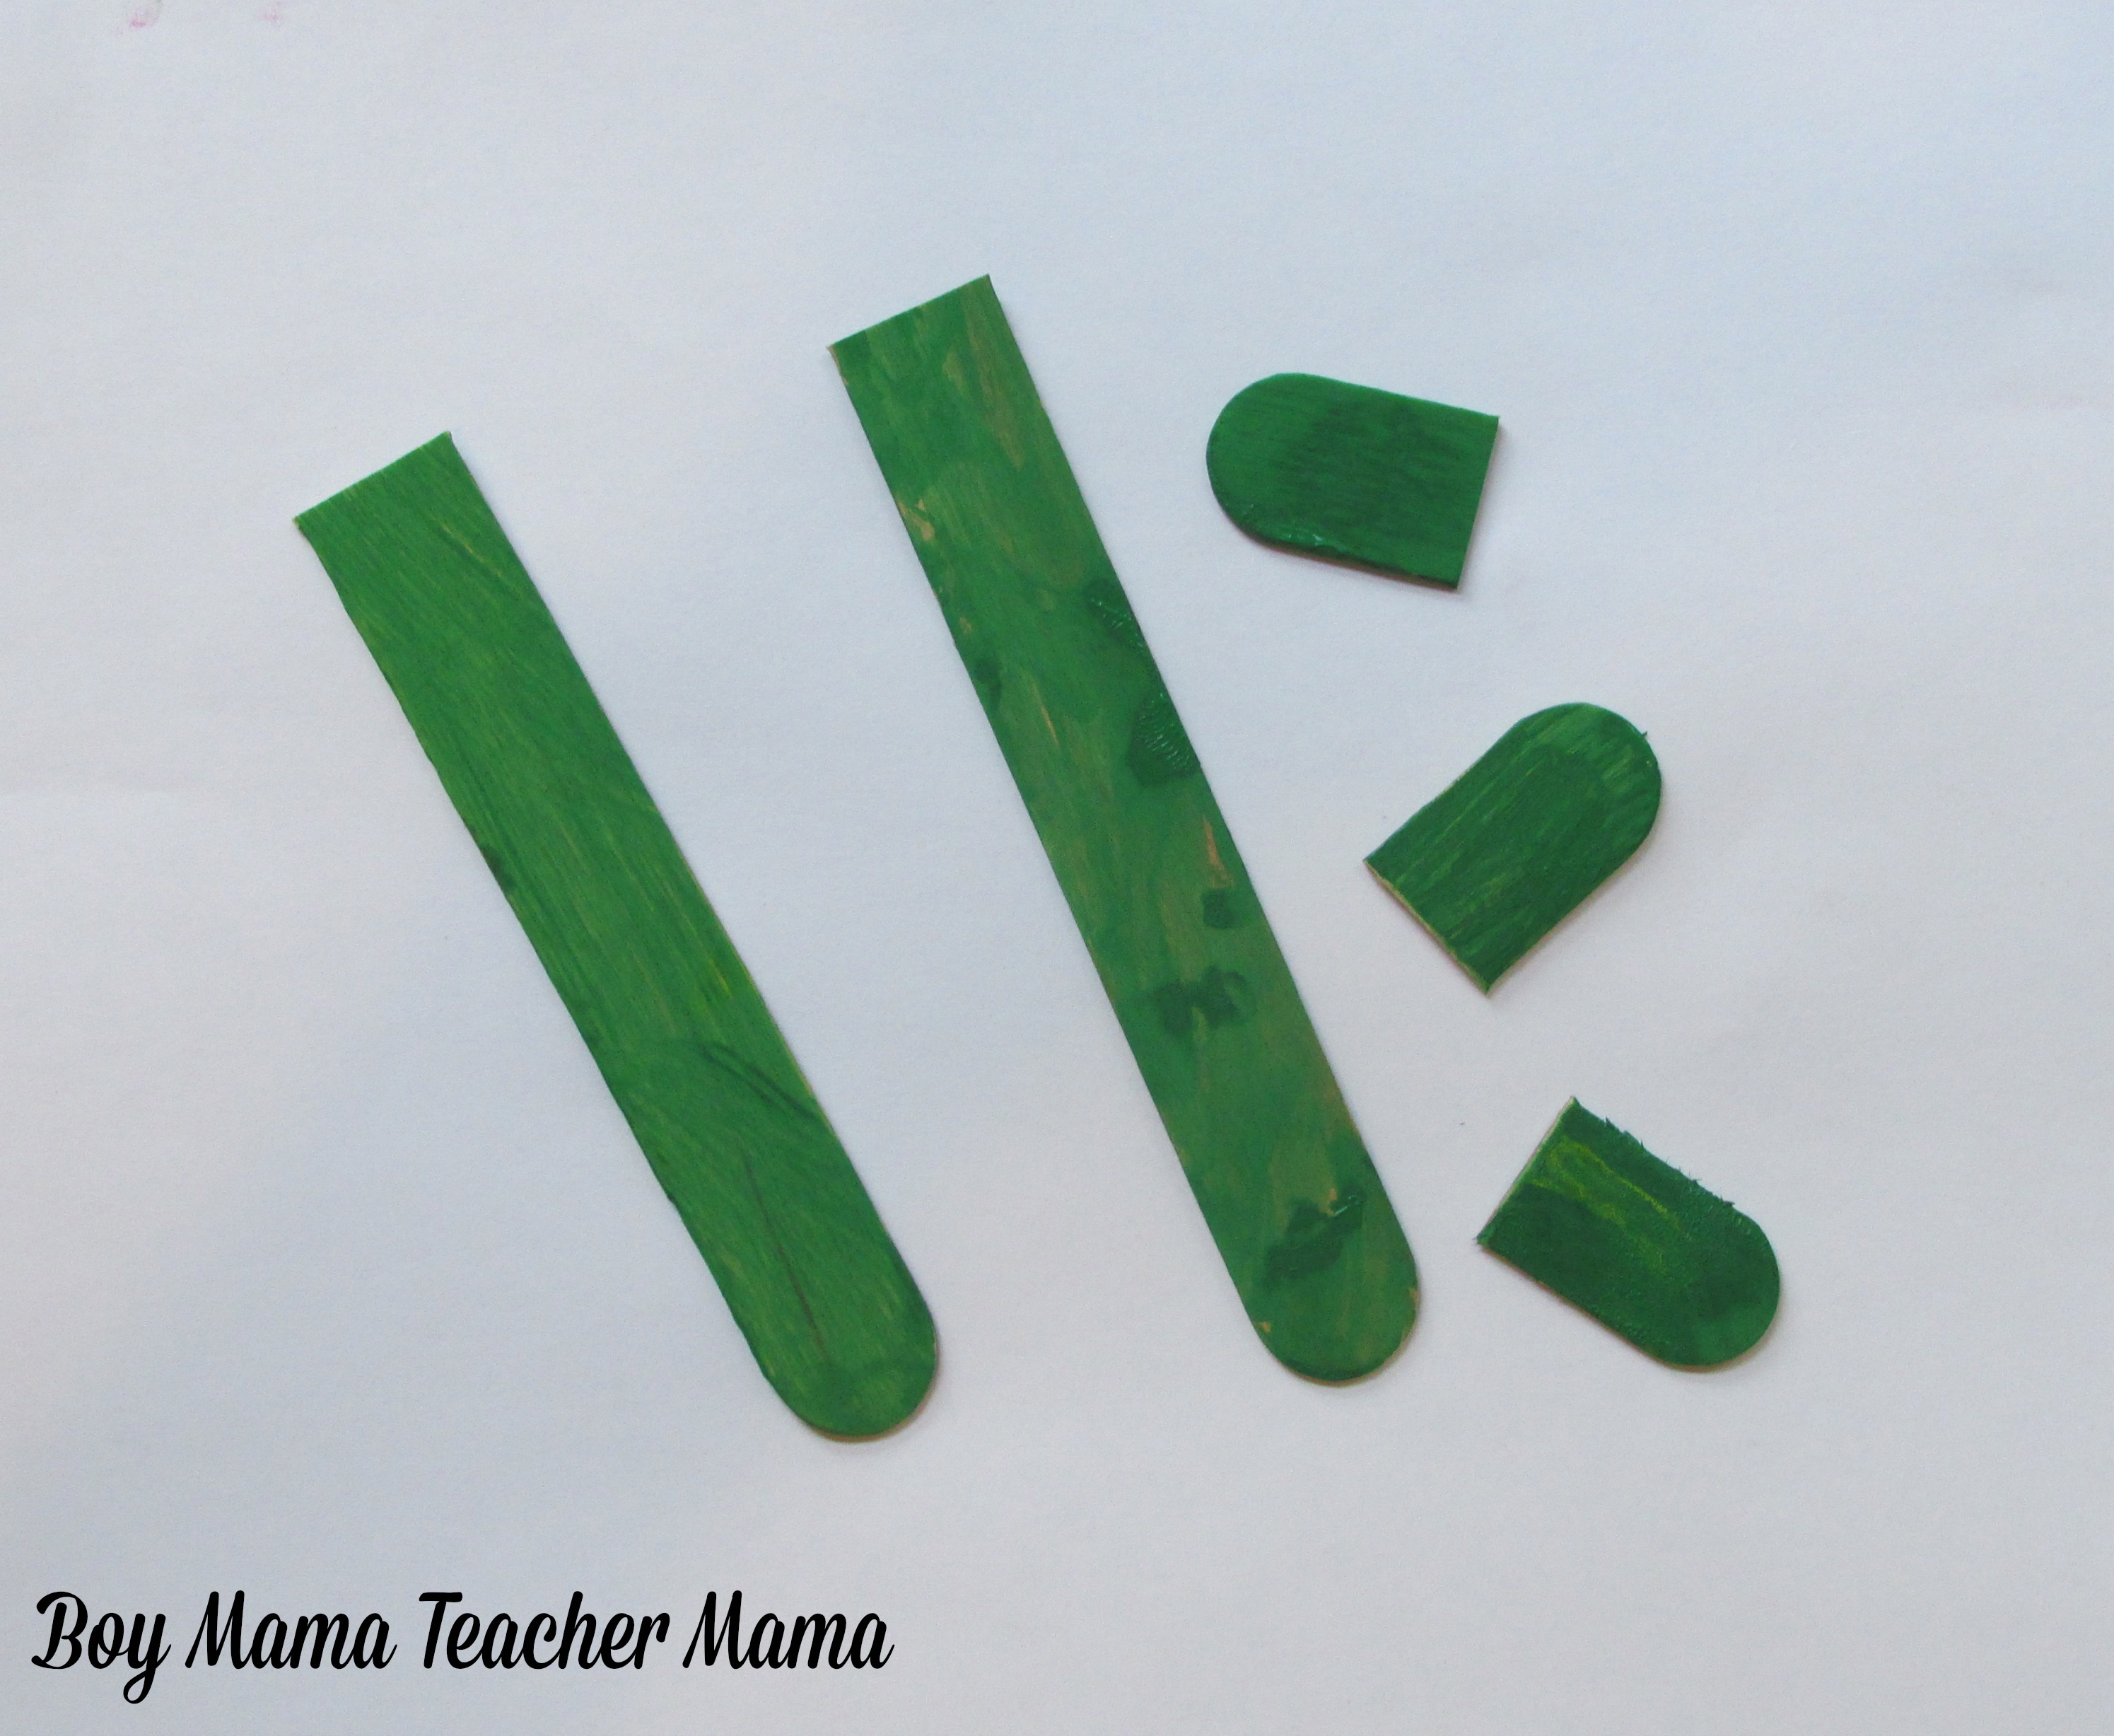 Boy Mama: Egg Carton and Popsicle Stick Flowers - Boy Mama Teacher Mama